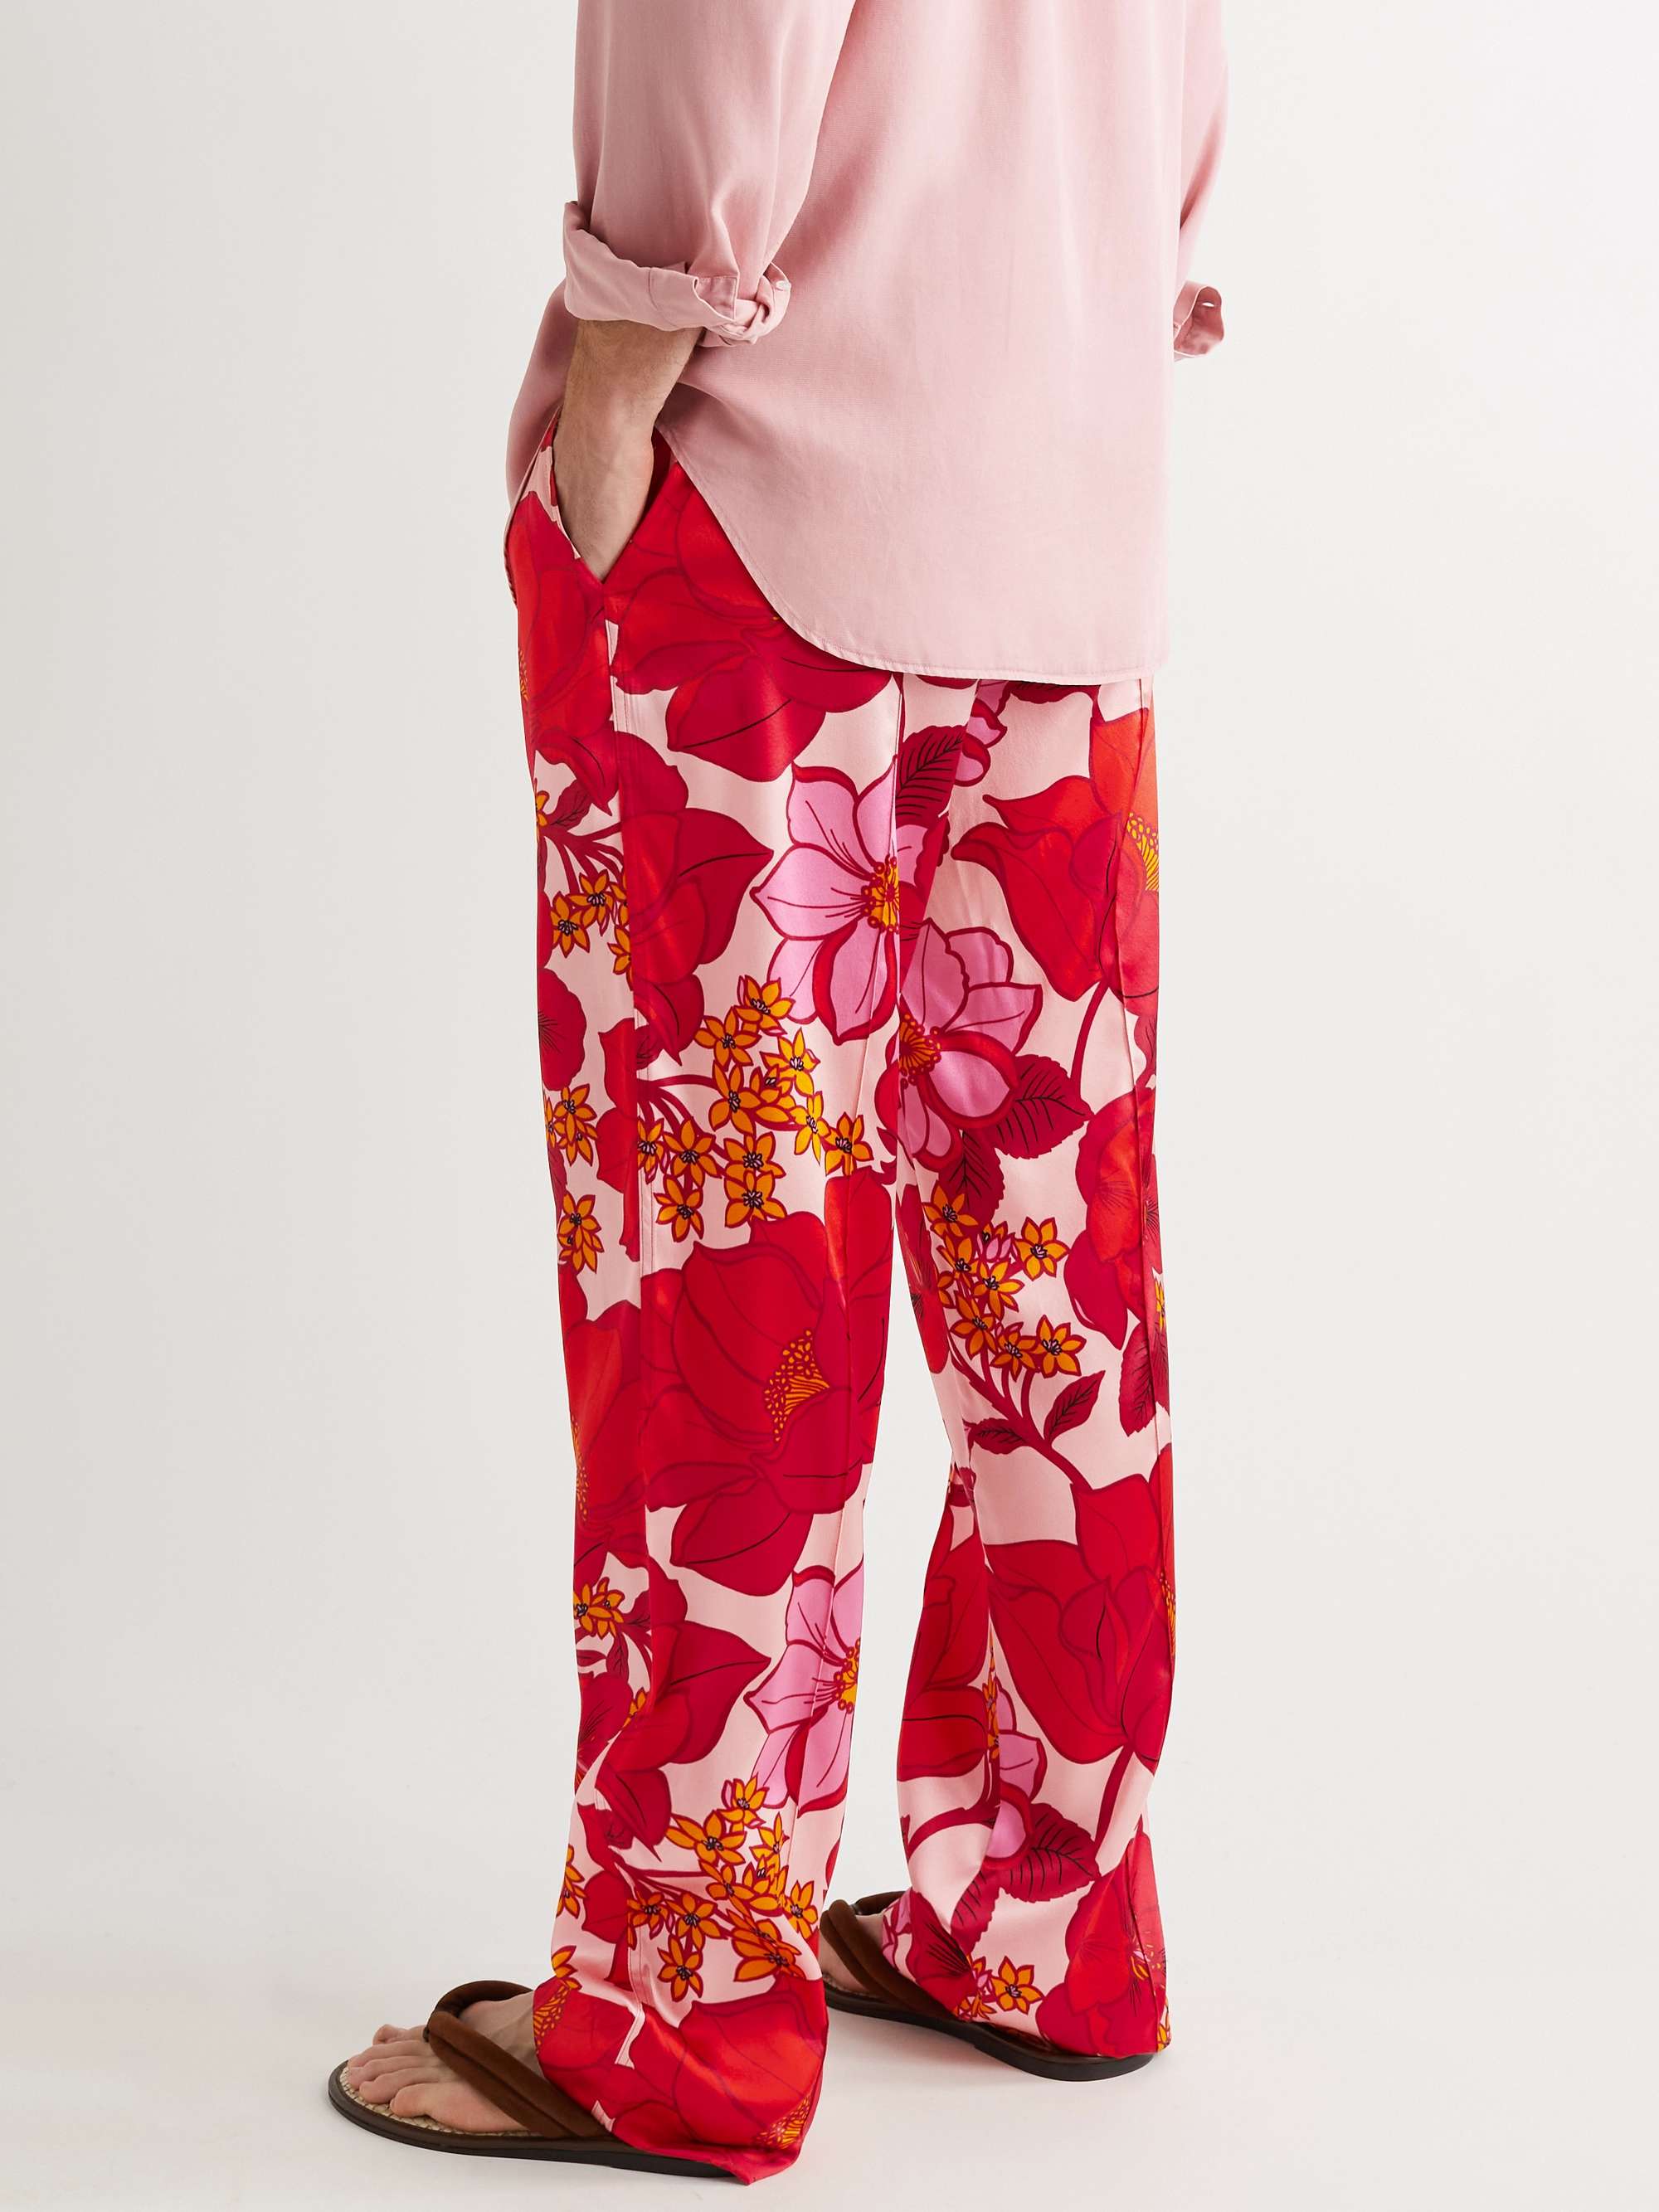 TOM FORD Velvet-Trimmed Printed Stretch-Silk Satin Pyjama Trousers